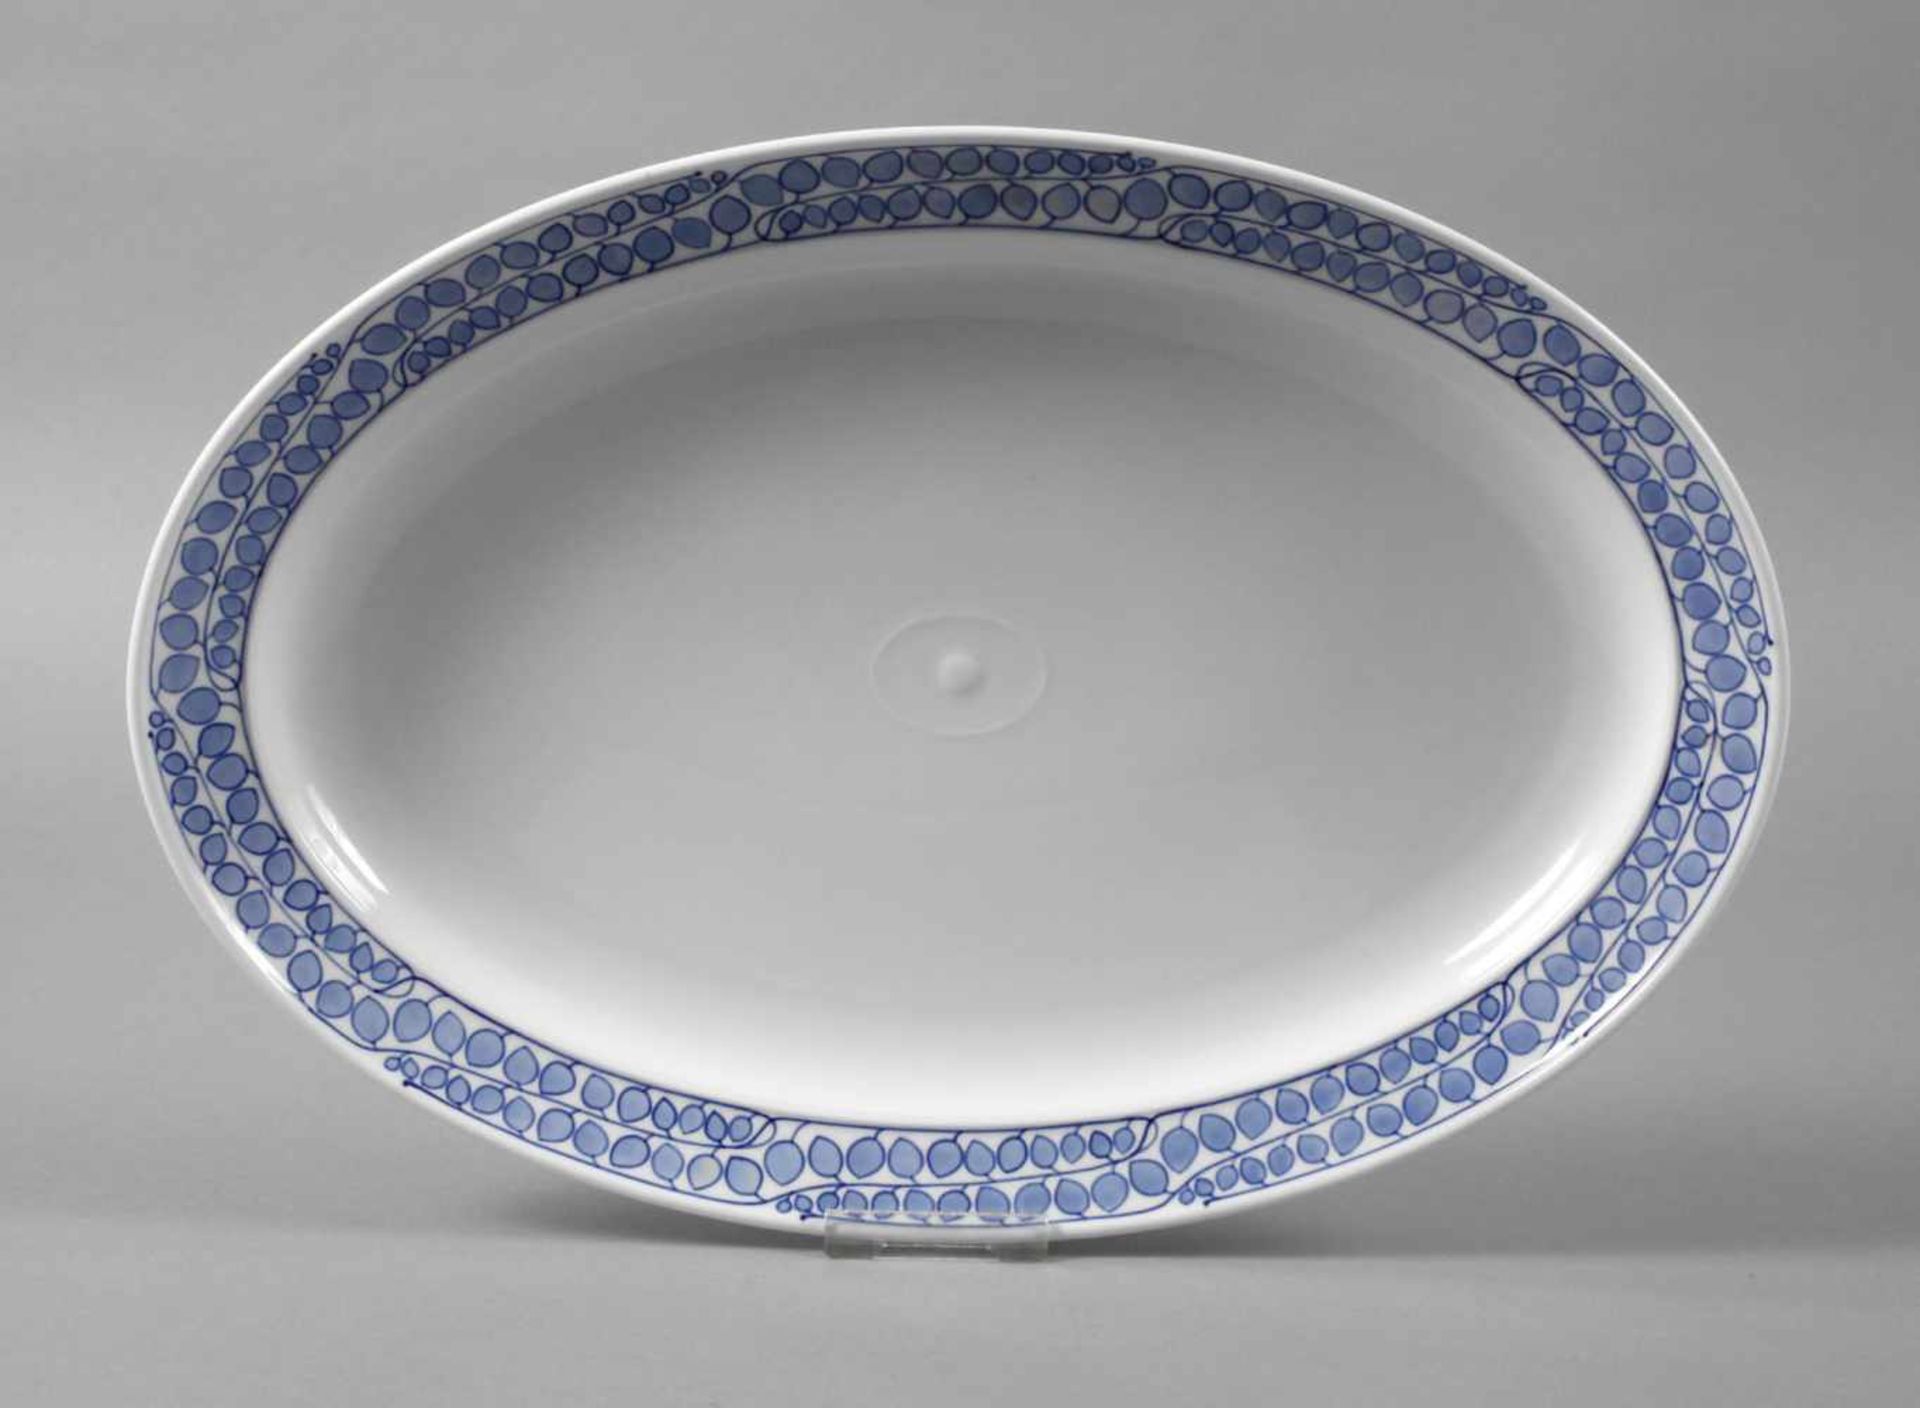 Meissen Platte "Blaue Rispe" Entwurf Richard Riemerschmid 1903-1905, unterglasurblaue